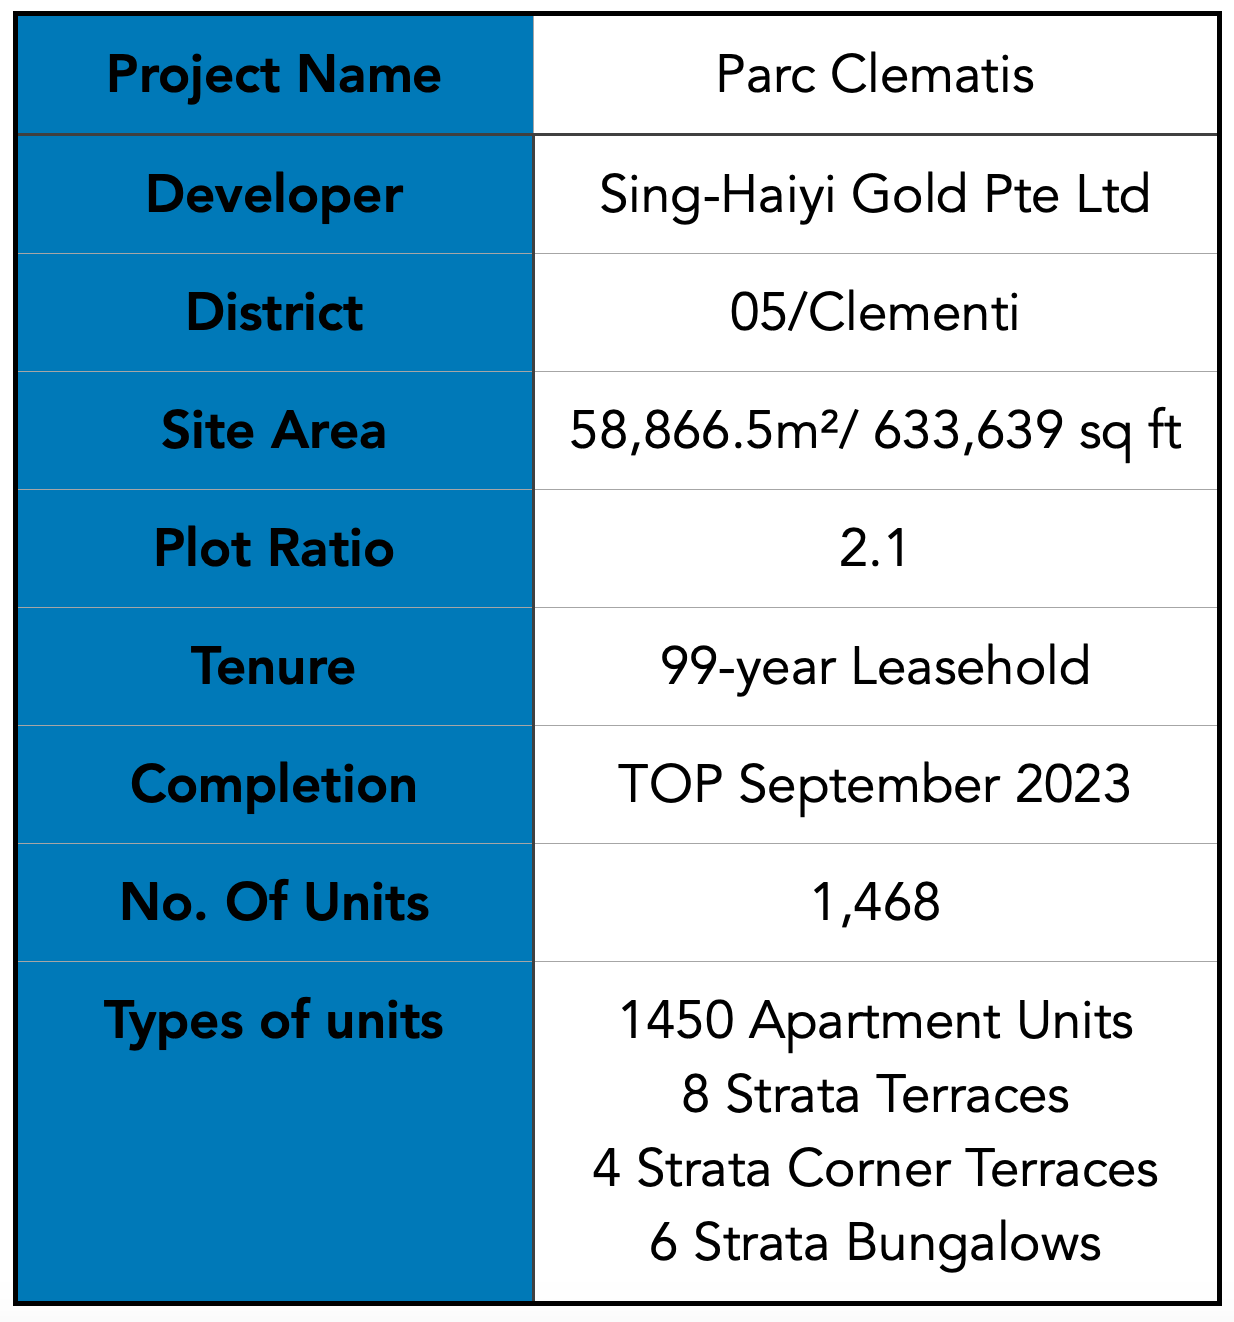 Parc Clematis Project Details PropertyLimBrothers.png